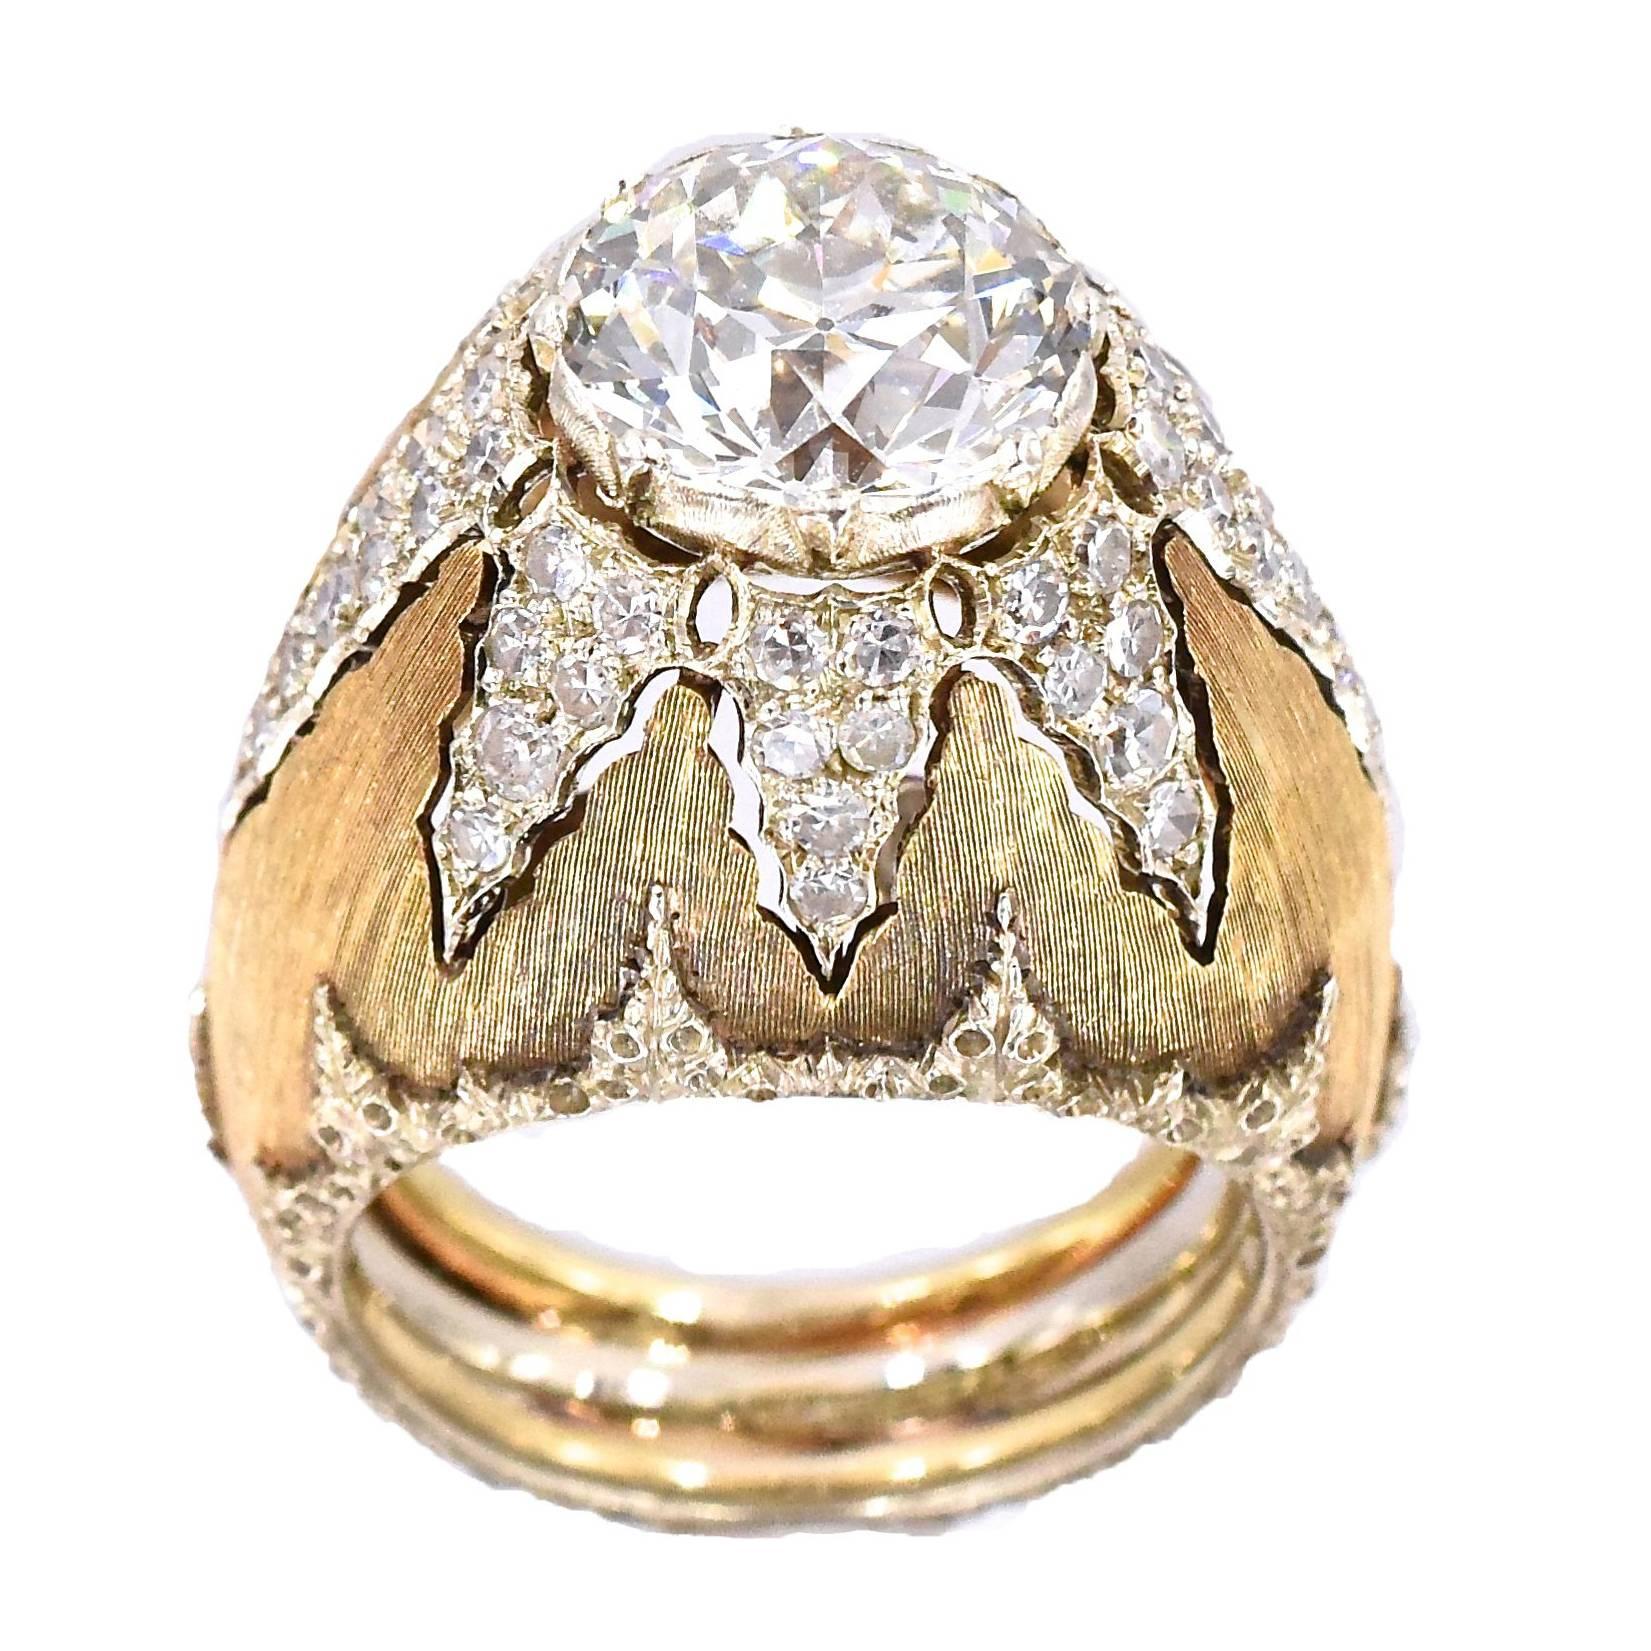 Buccellati Diamond 18k Gold Wedding Band Ring Size 5.5 | eBay